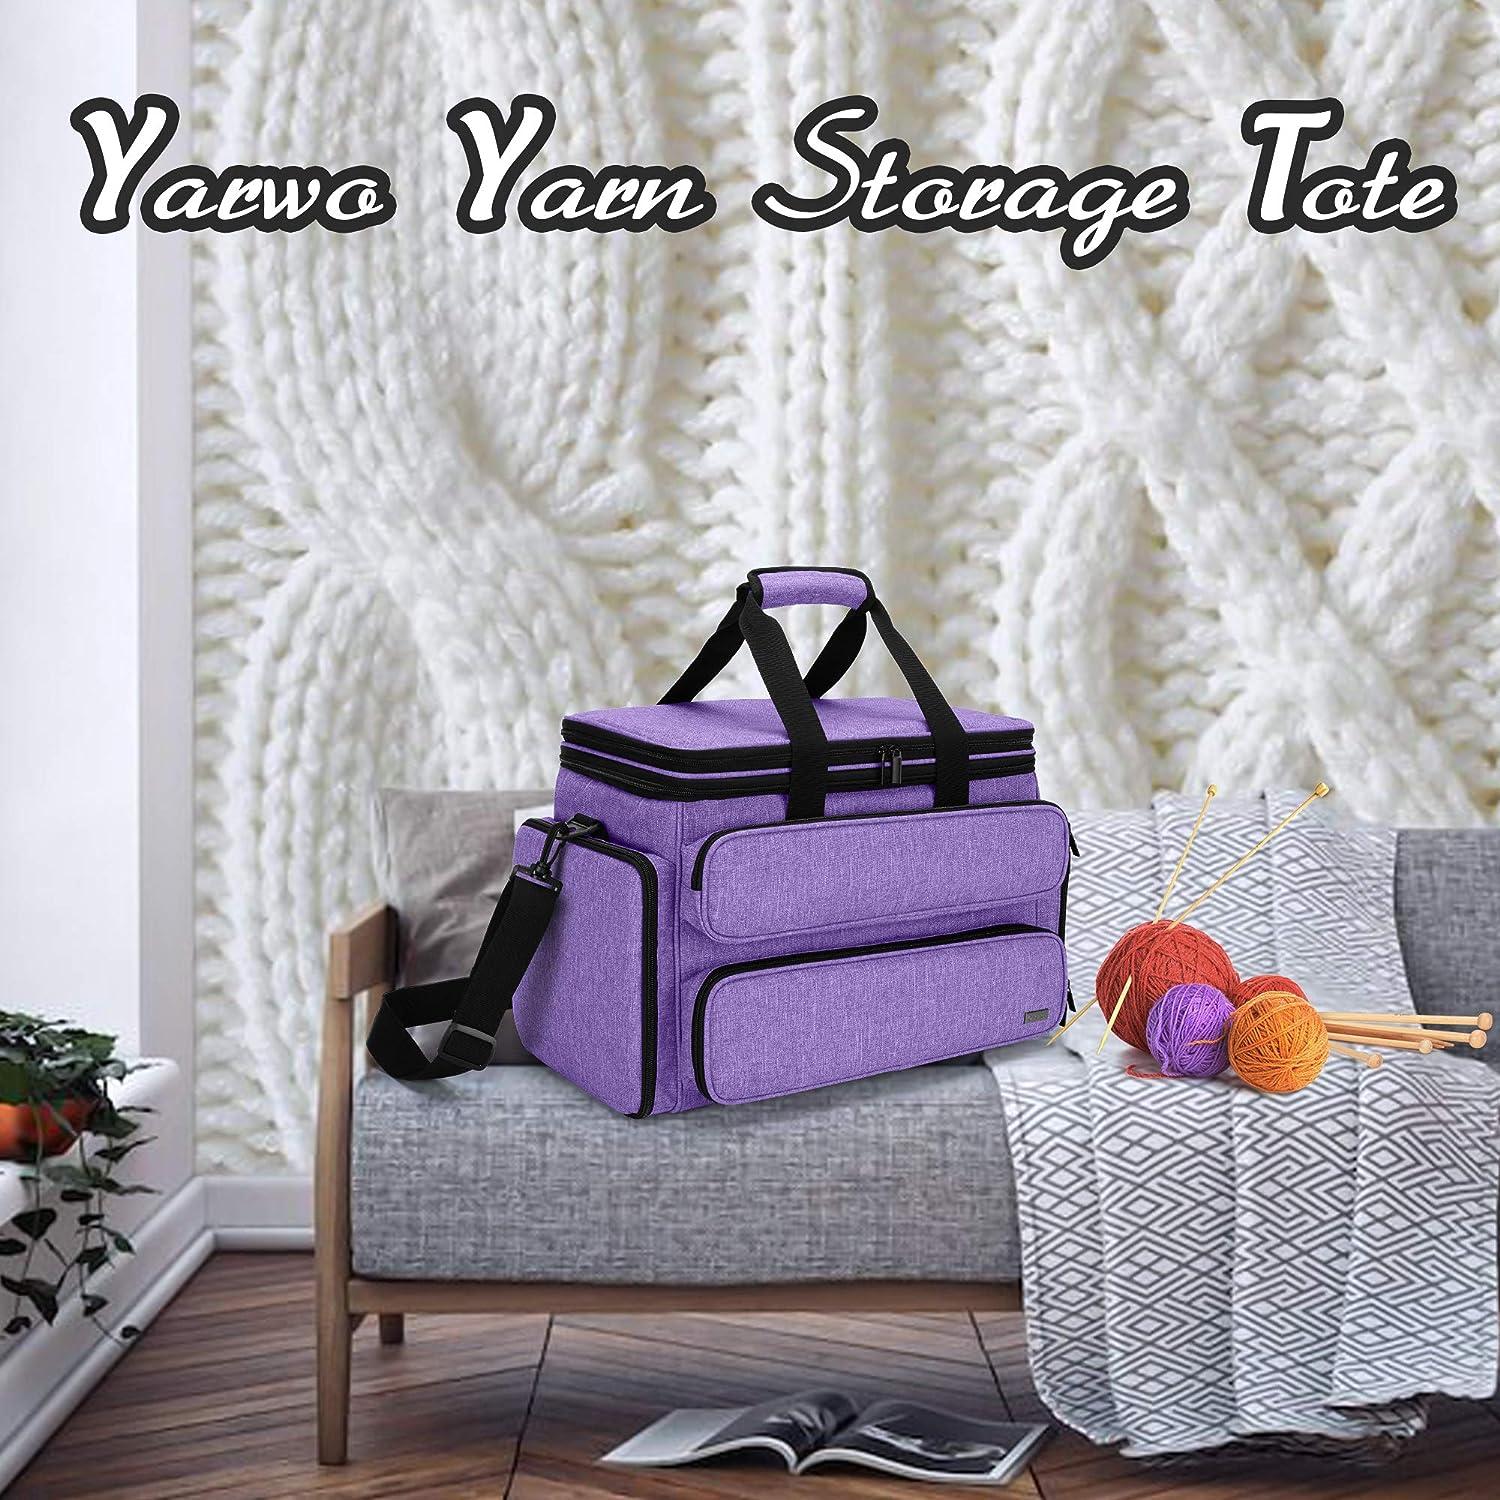 YARWO Knitting Yarn Bag, Portable Crochet Storage Tote with Double